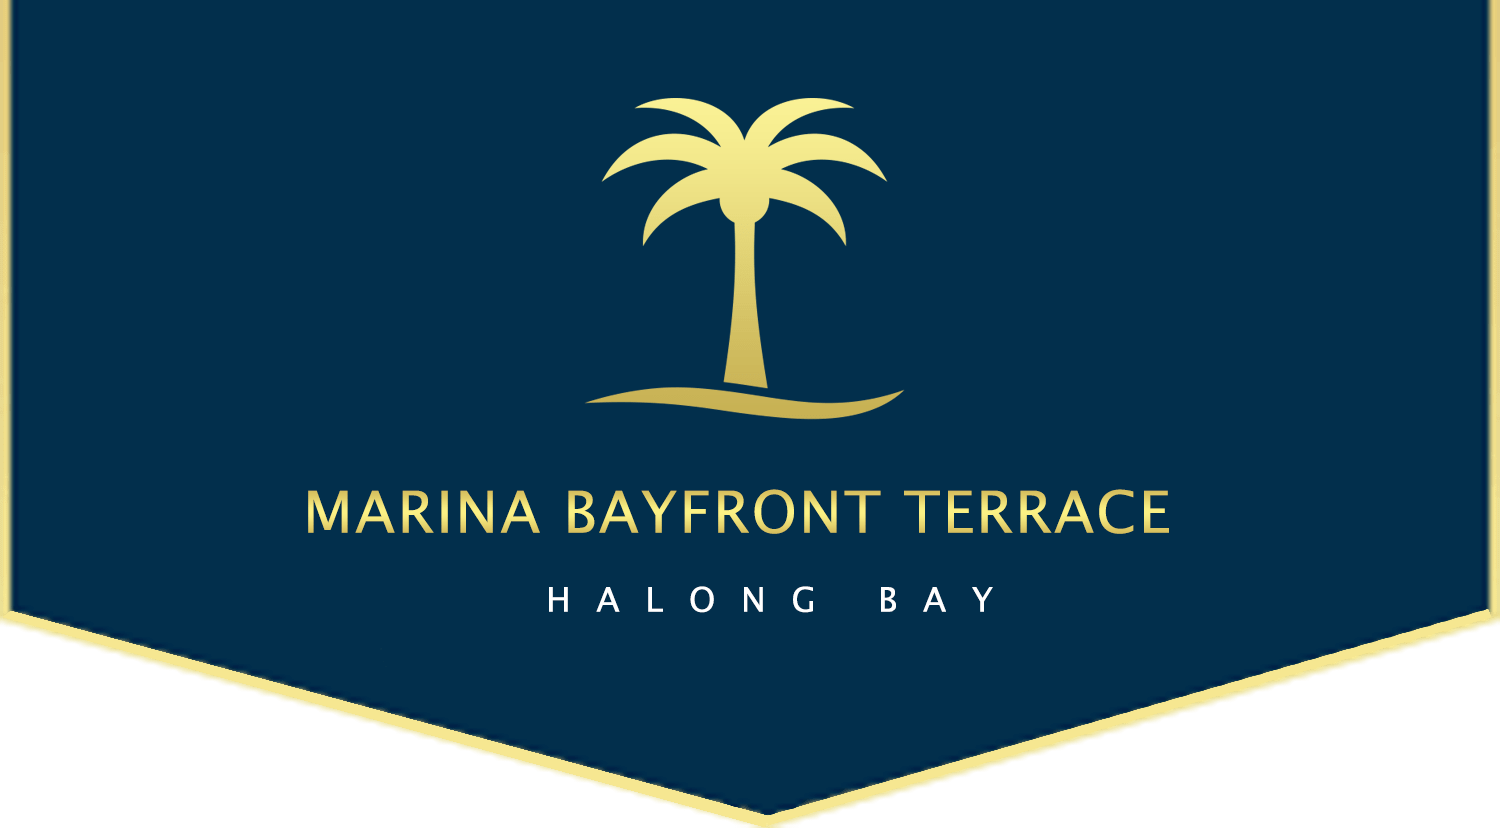 Marina Bayfront Terrace